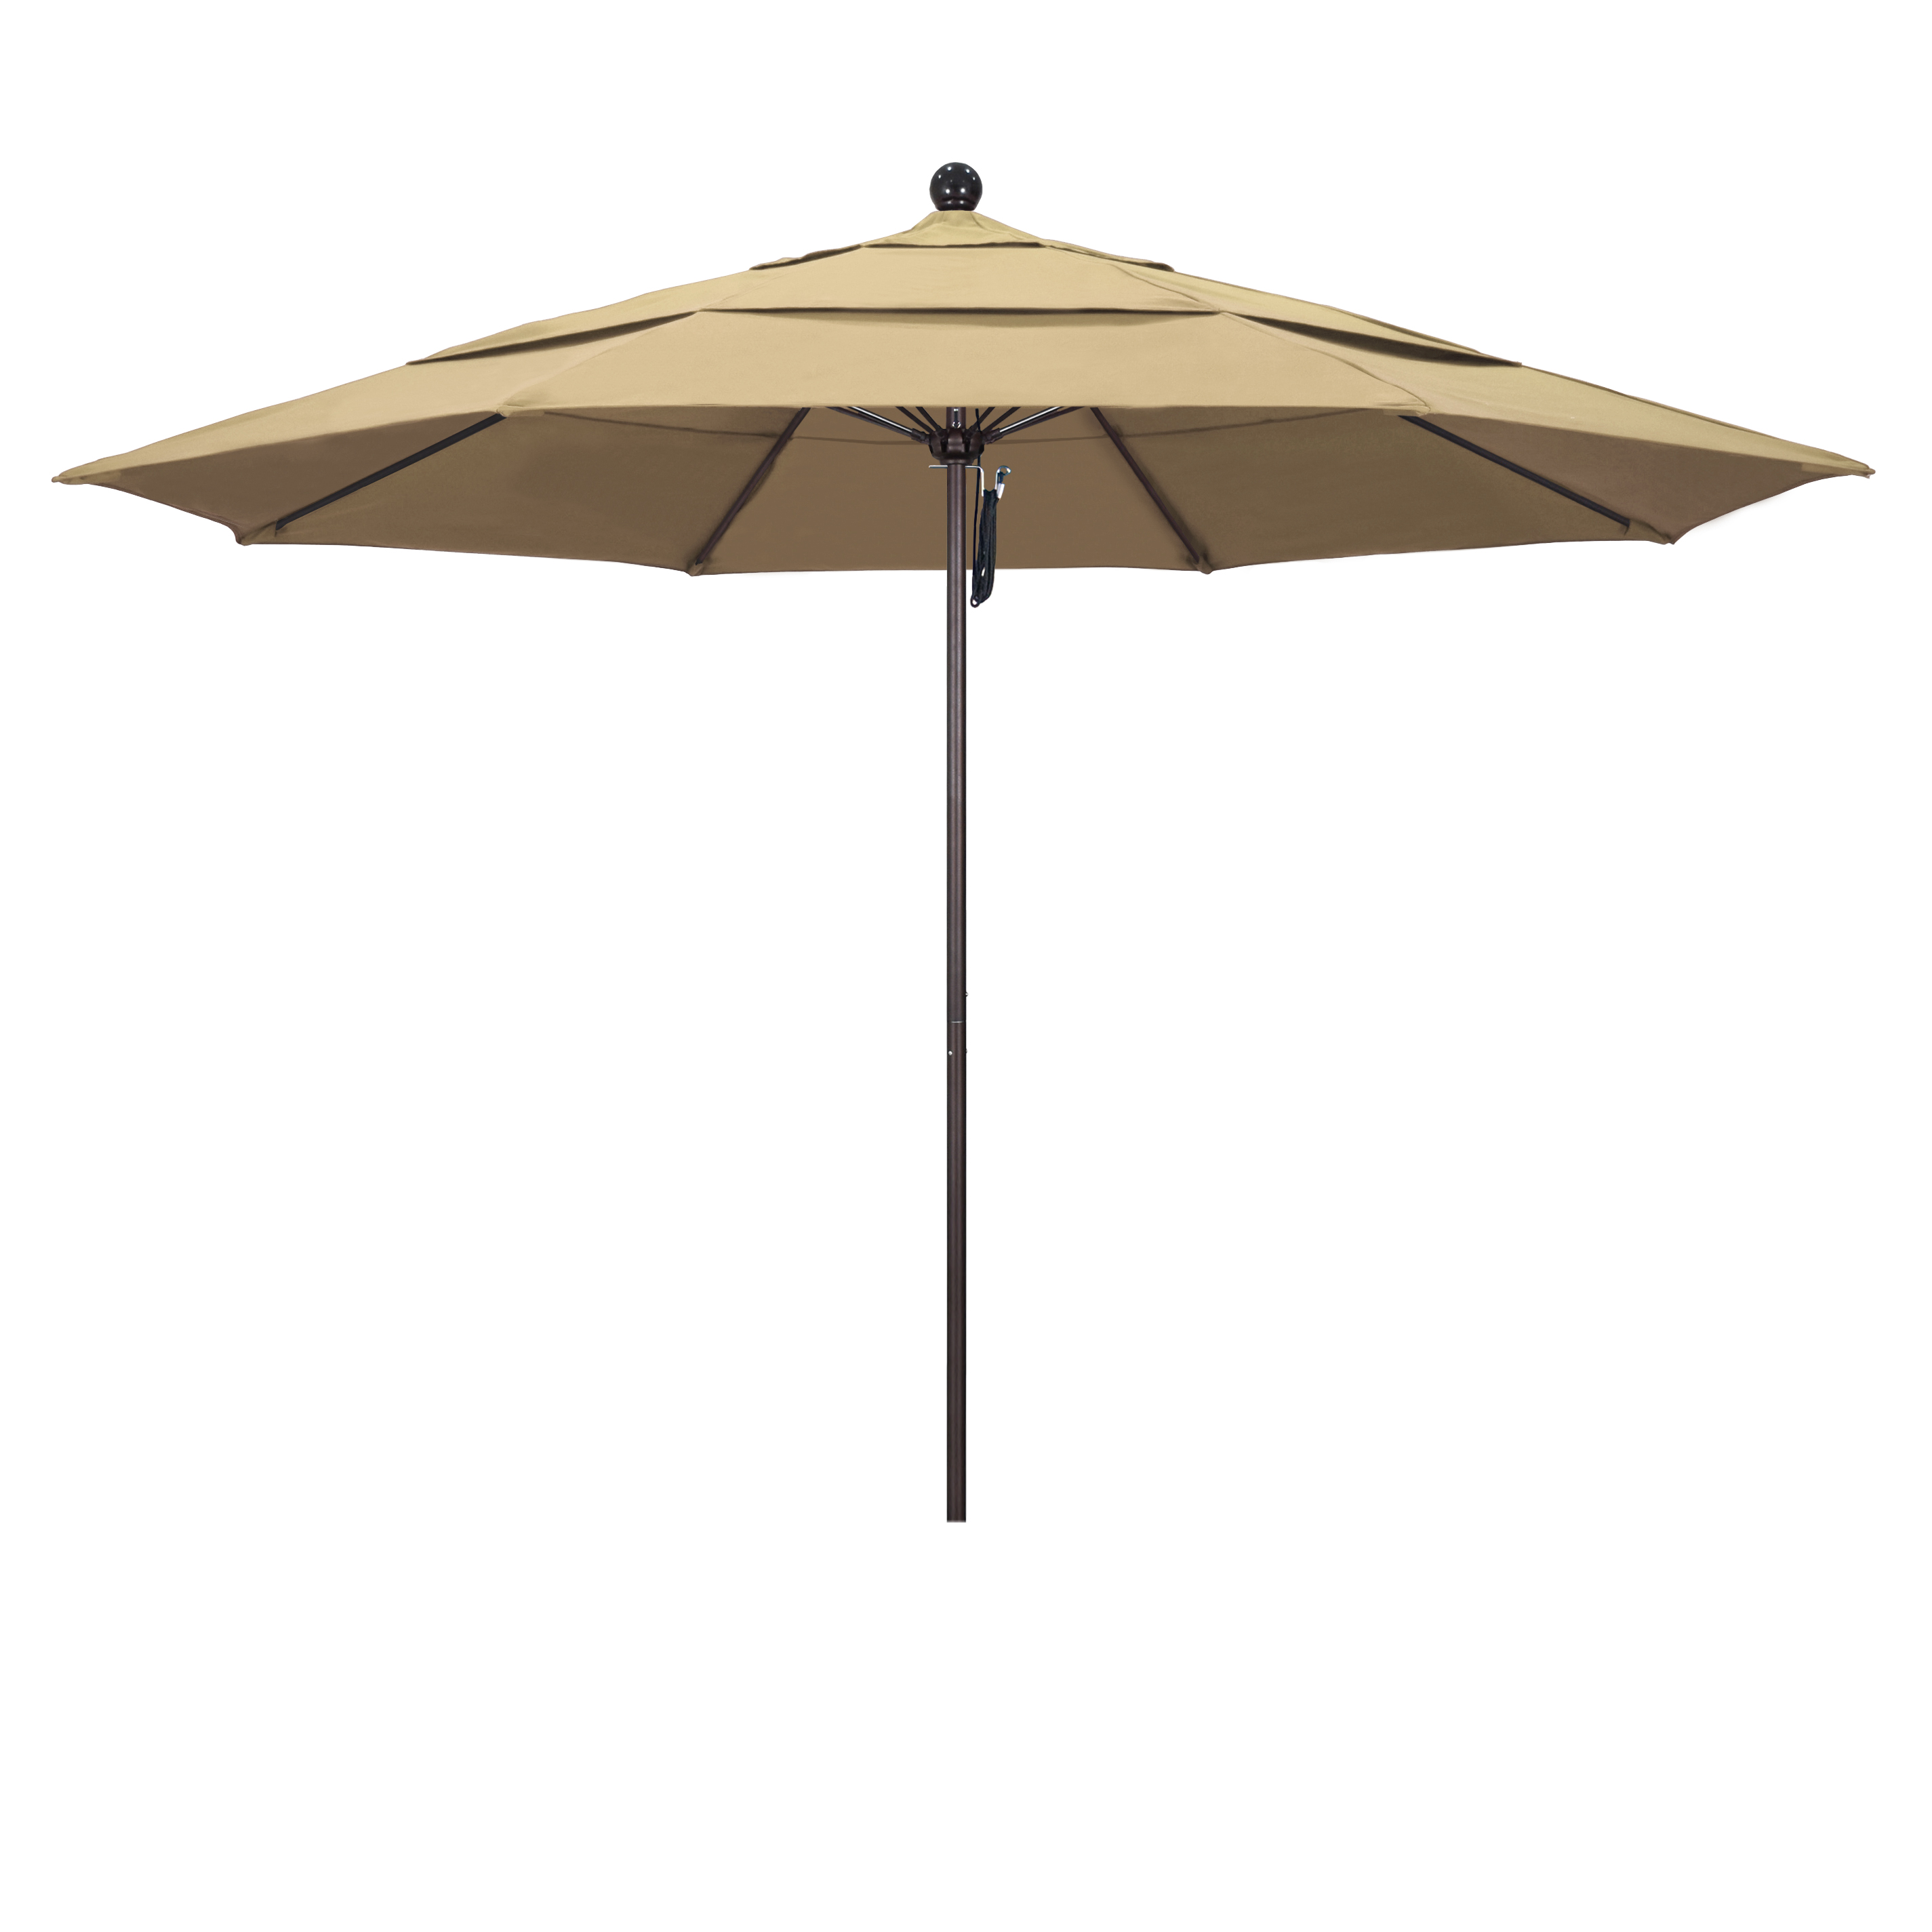 Alto118117-sa22-dwv 11 Ft. Fiberglass Pulley Open Double Vents Market Umbrella - Bronze And Pacifica-beige